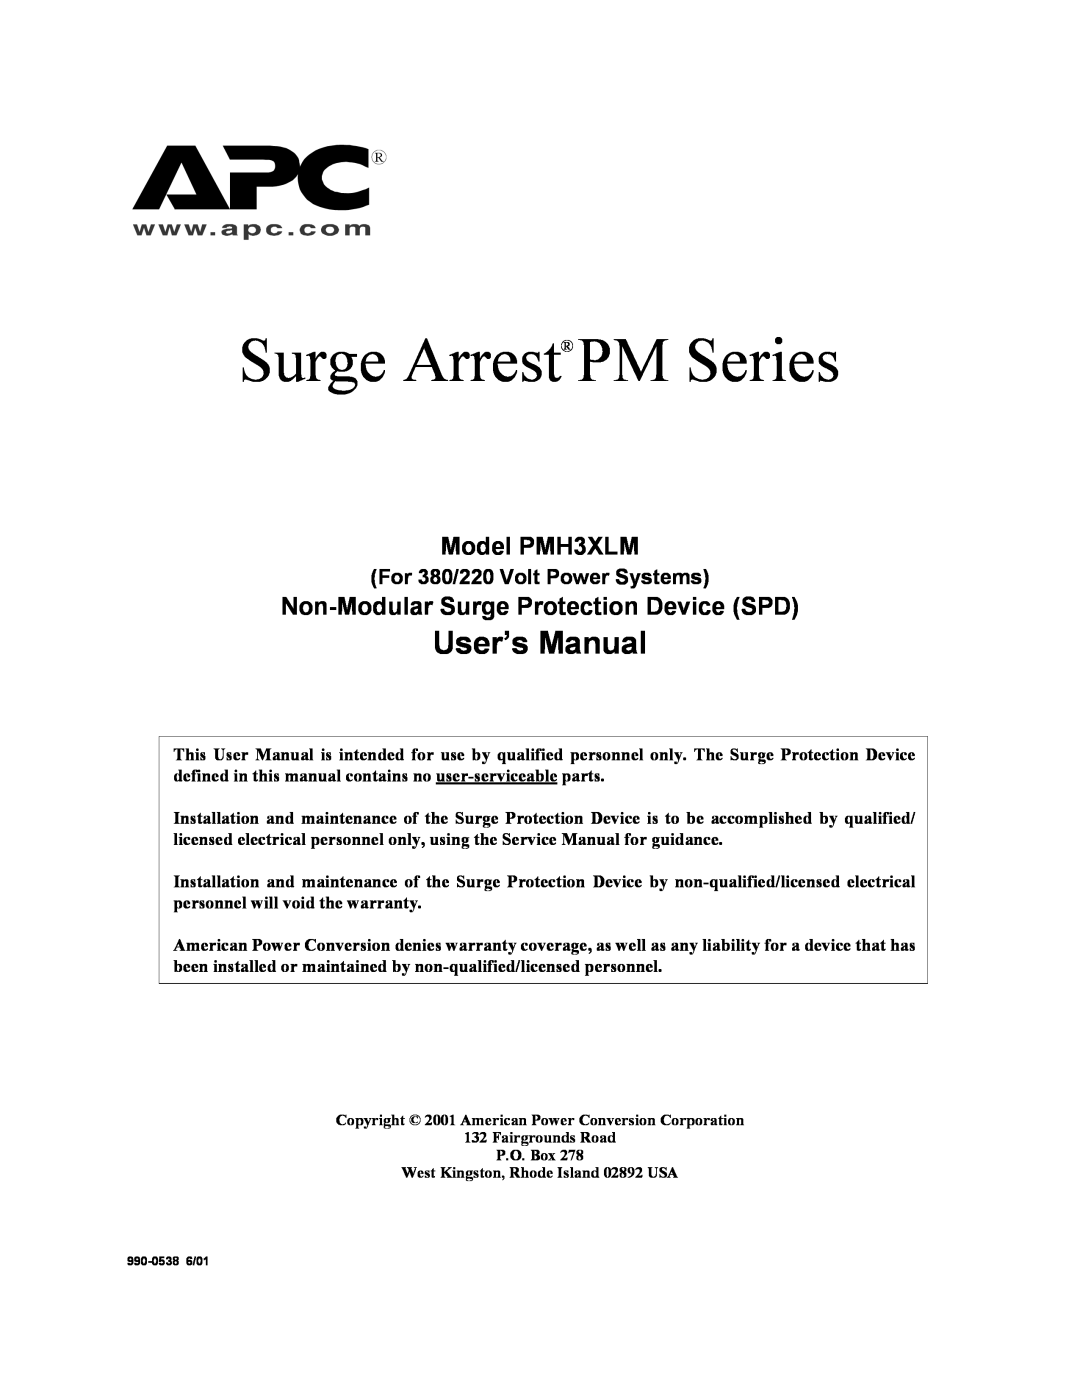 American Power Conversion user manual Surge Arrest PM Series, User’s Manual, Model PMH3XLM 